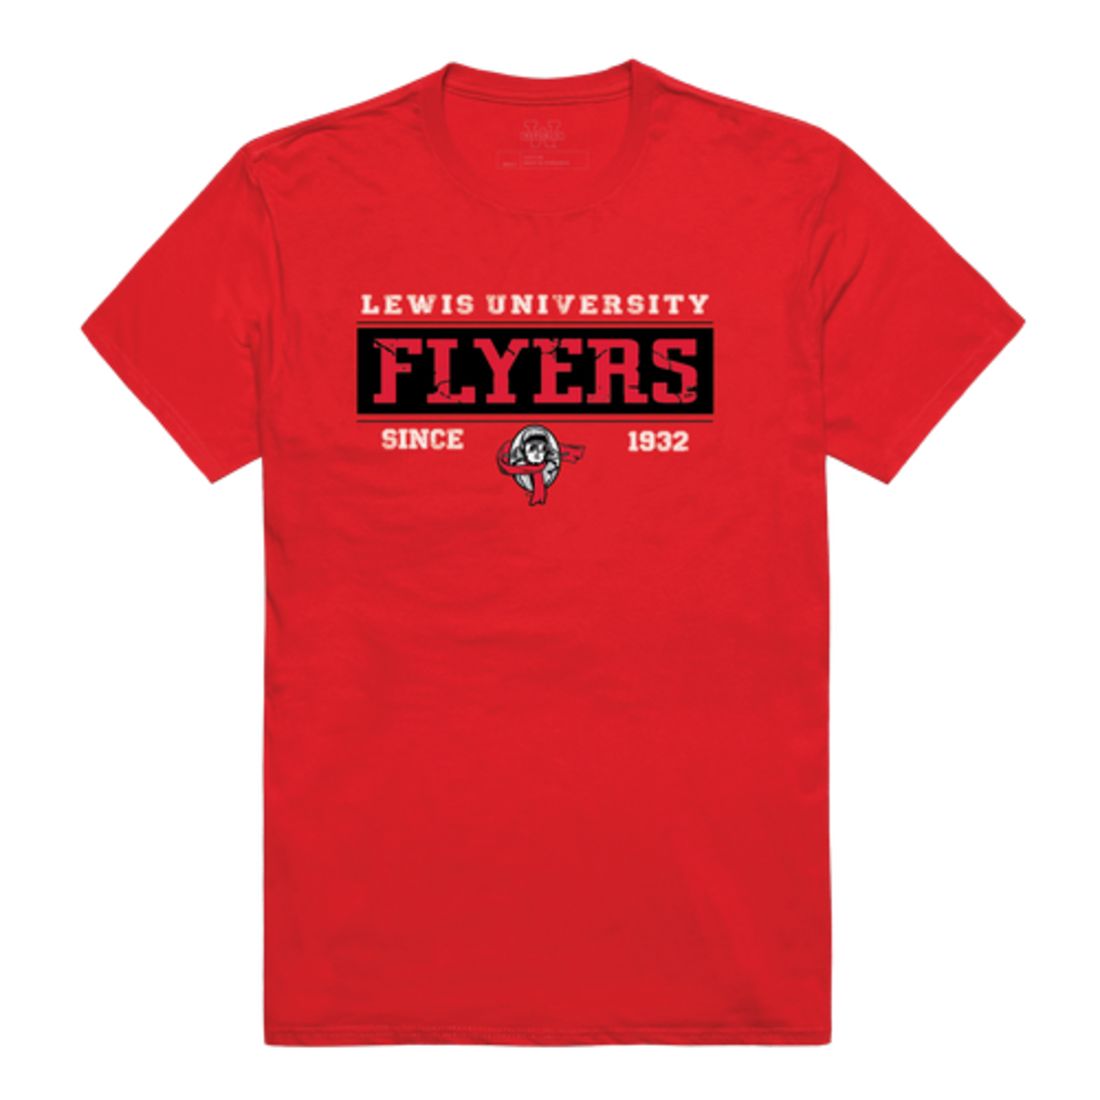 Lewis University Flyers Established T-Shirt Tee